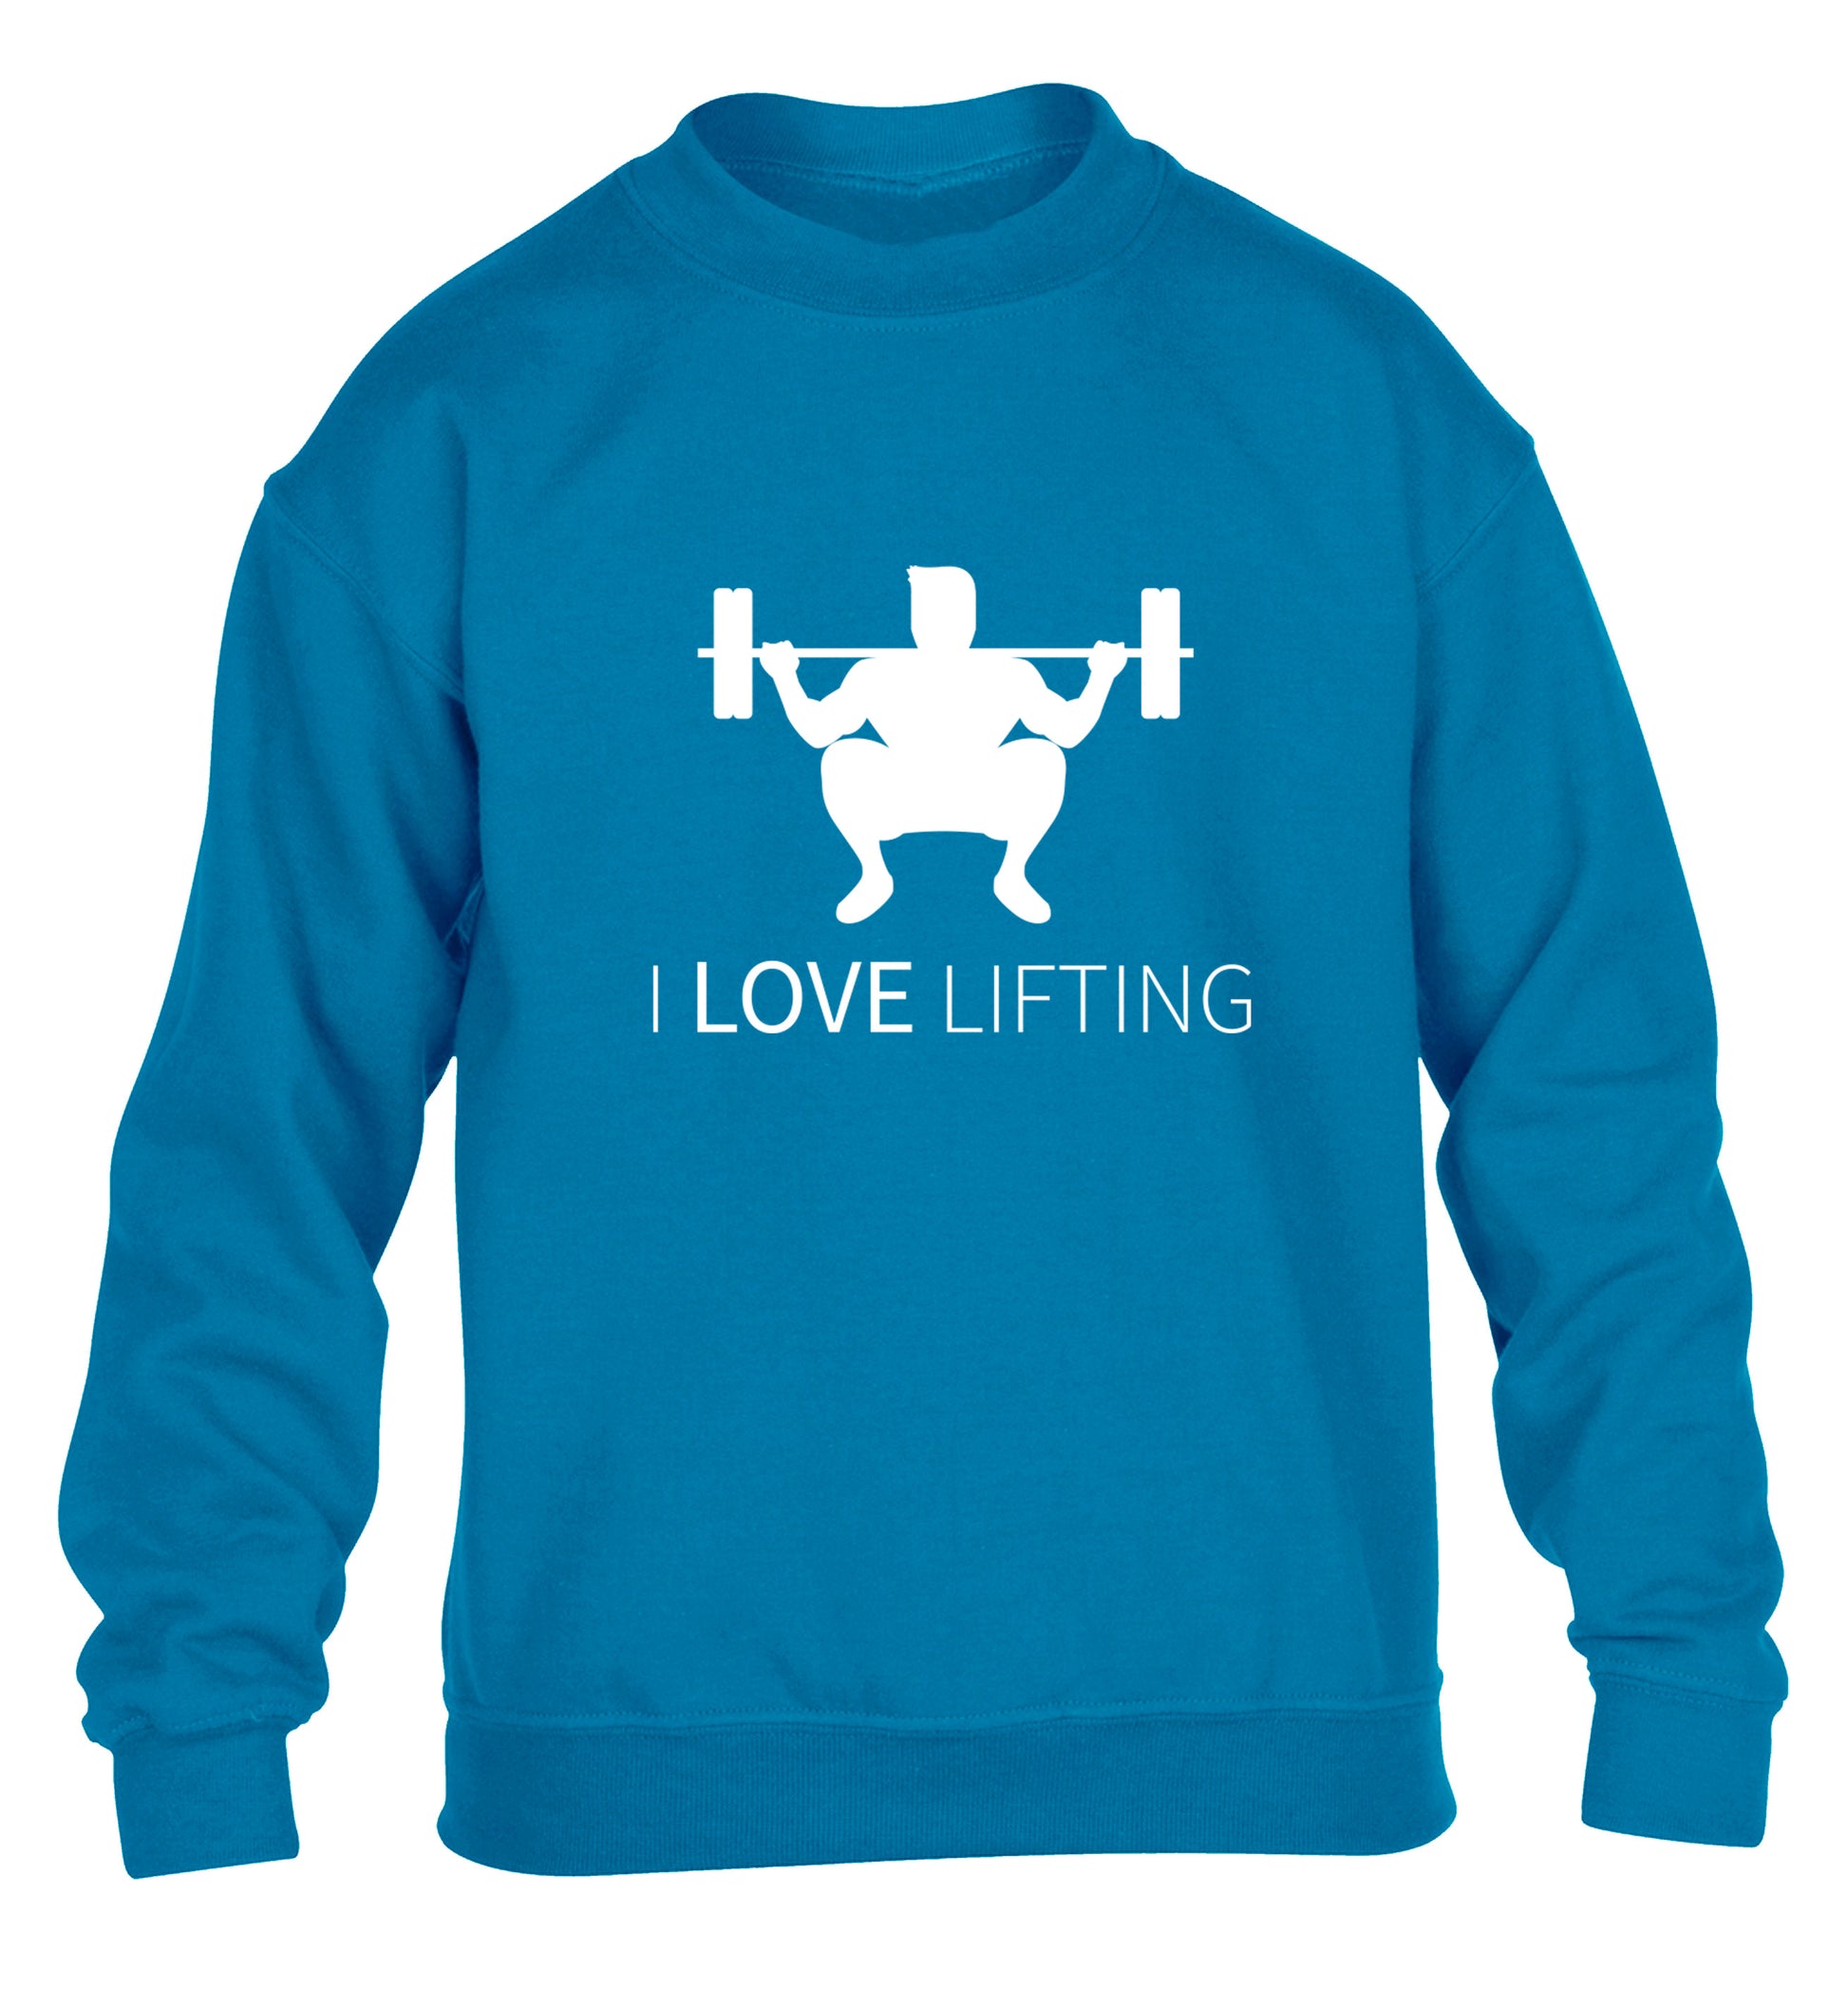 I Love Lifting children's blue sweater 12-13 Years